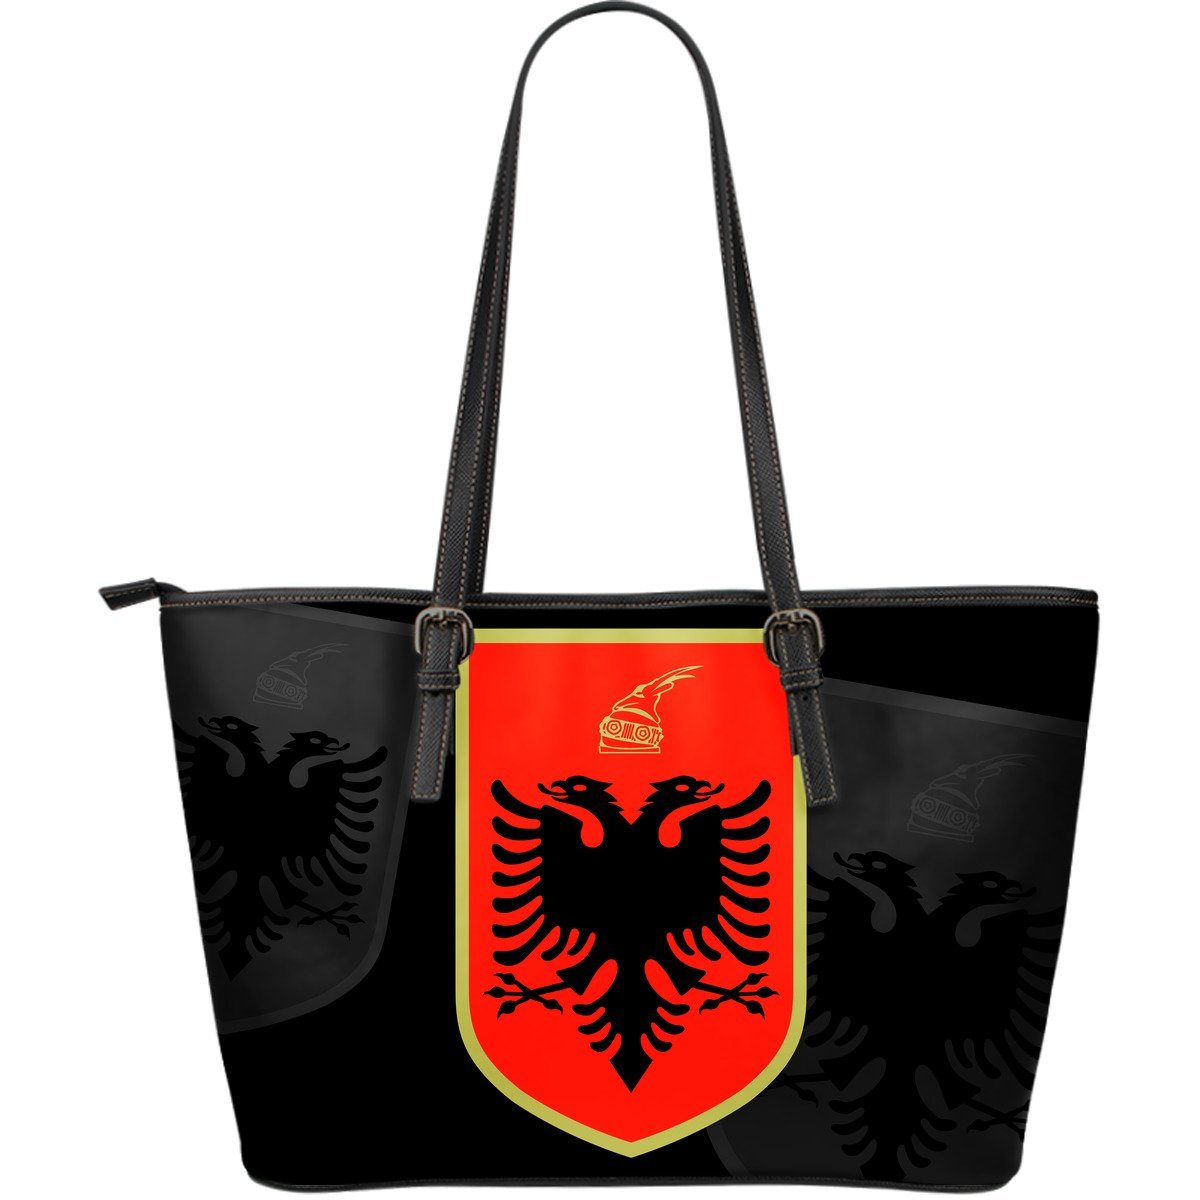 albania-leather-tote-bag-large-size